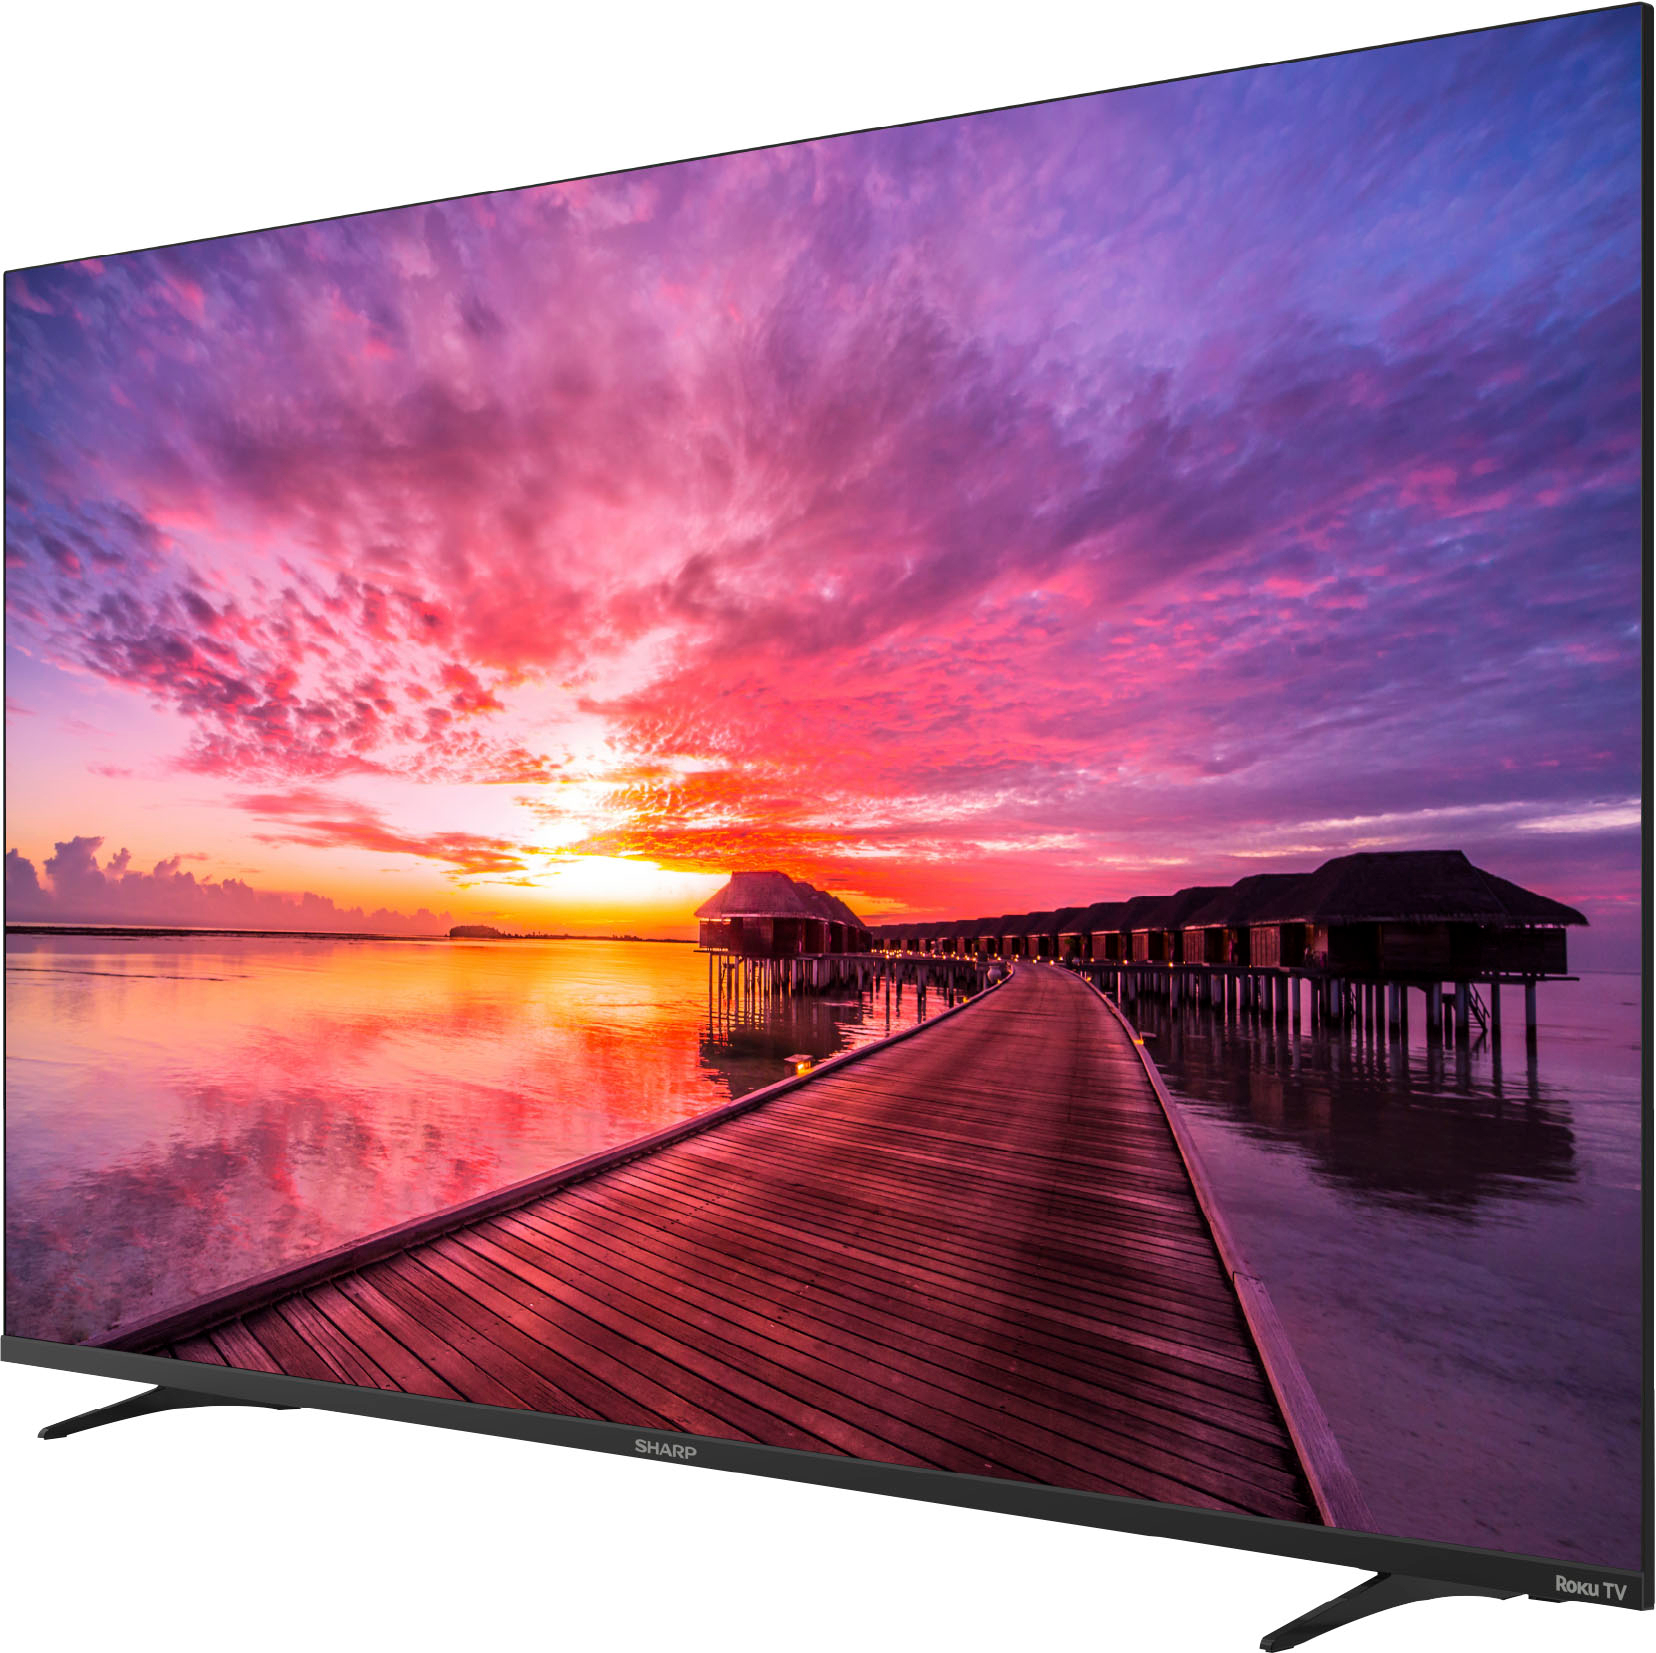 Sharp 65 Class LED 4K Smart Roku TV review